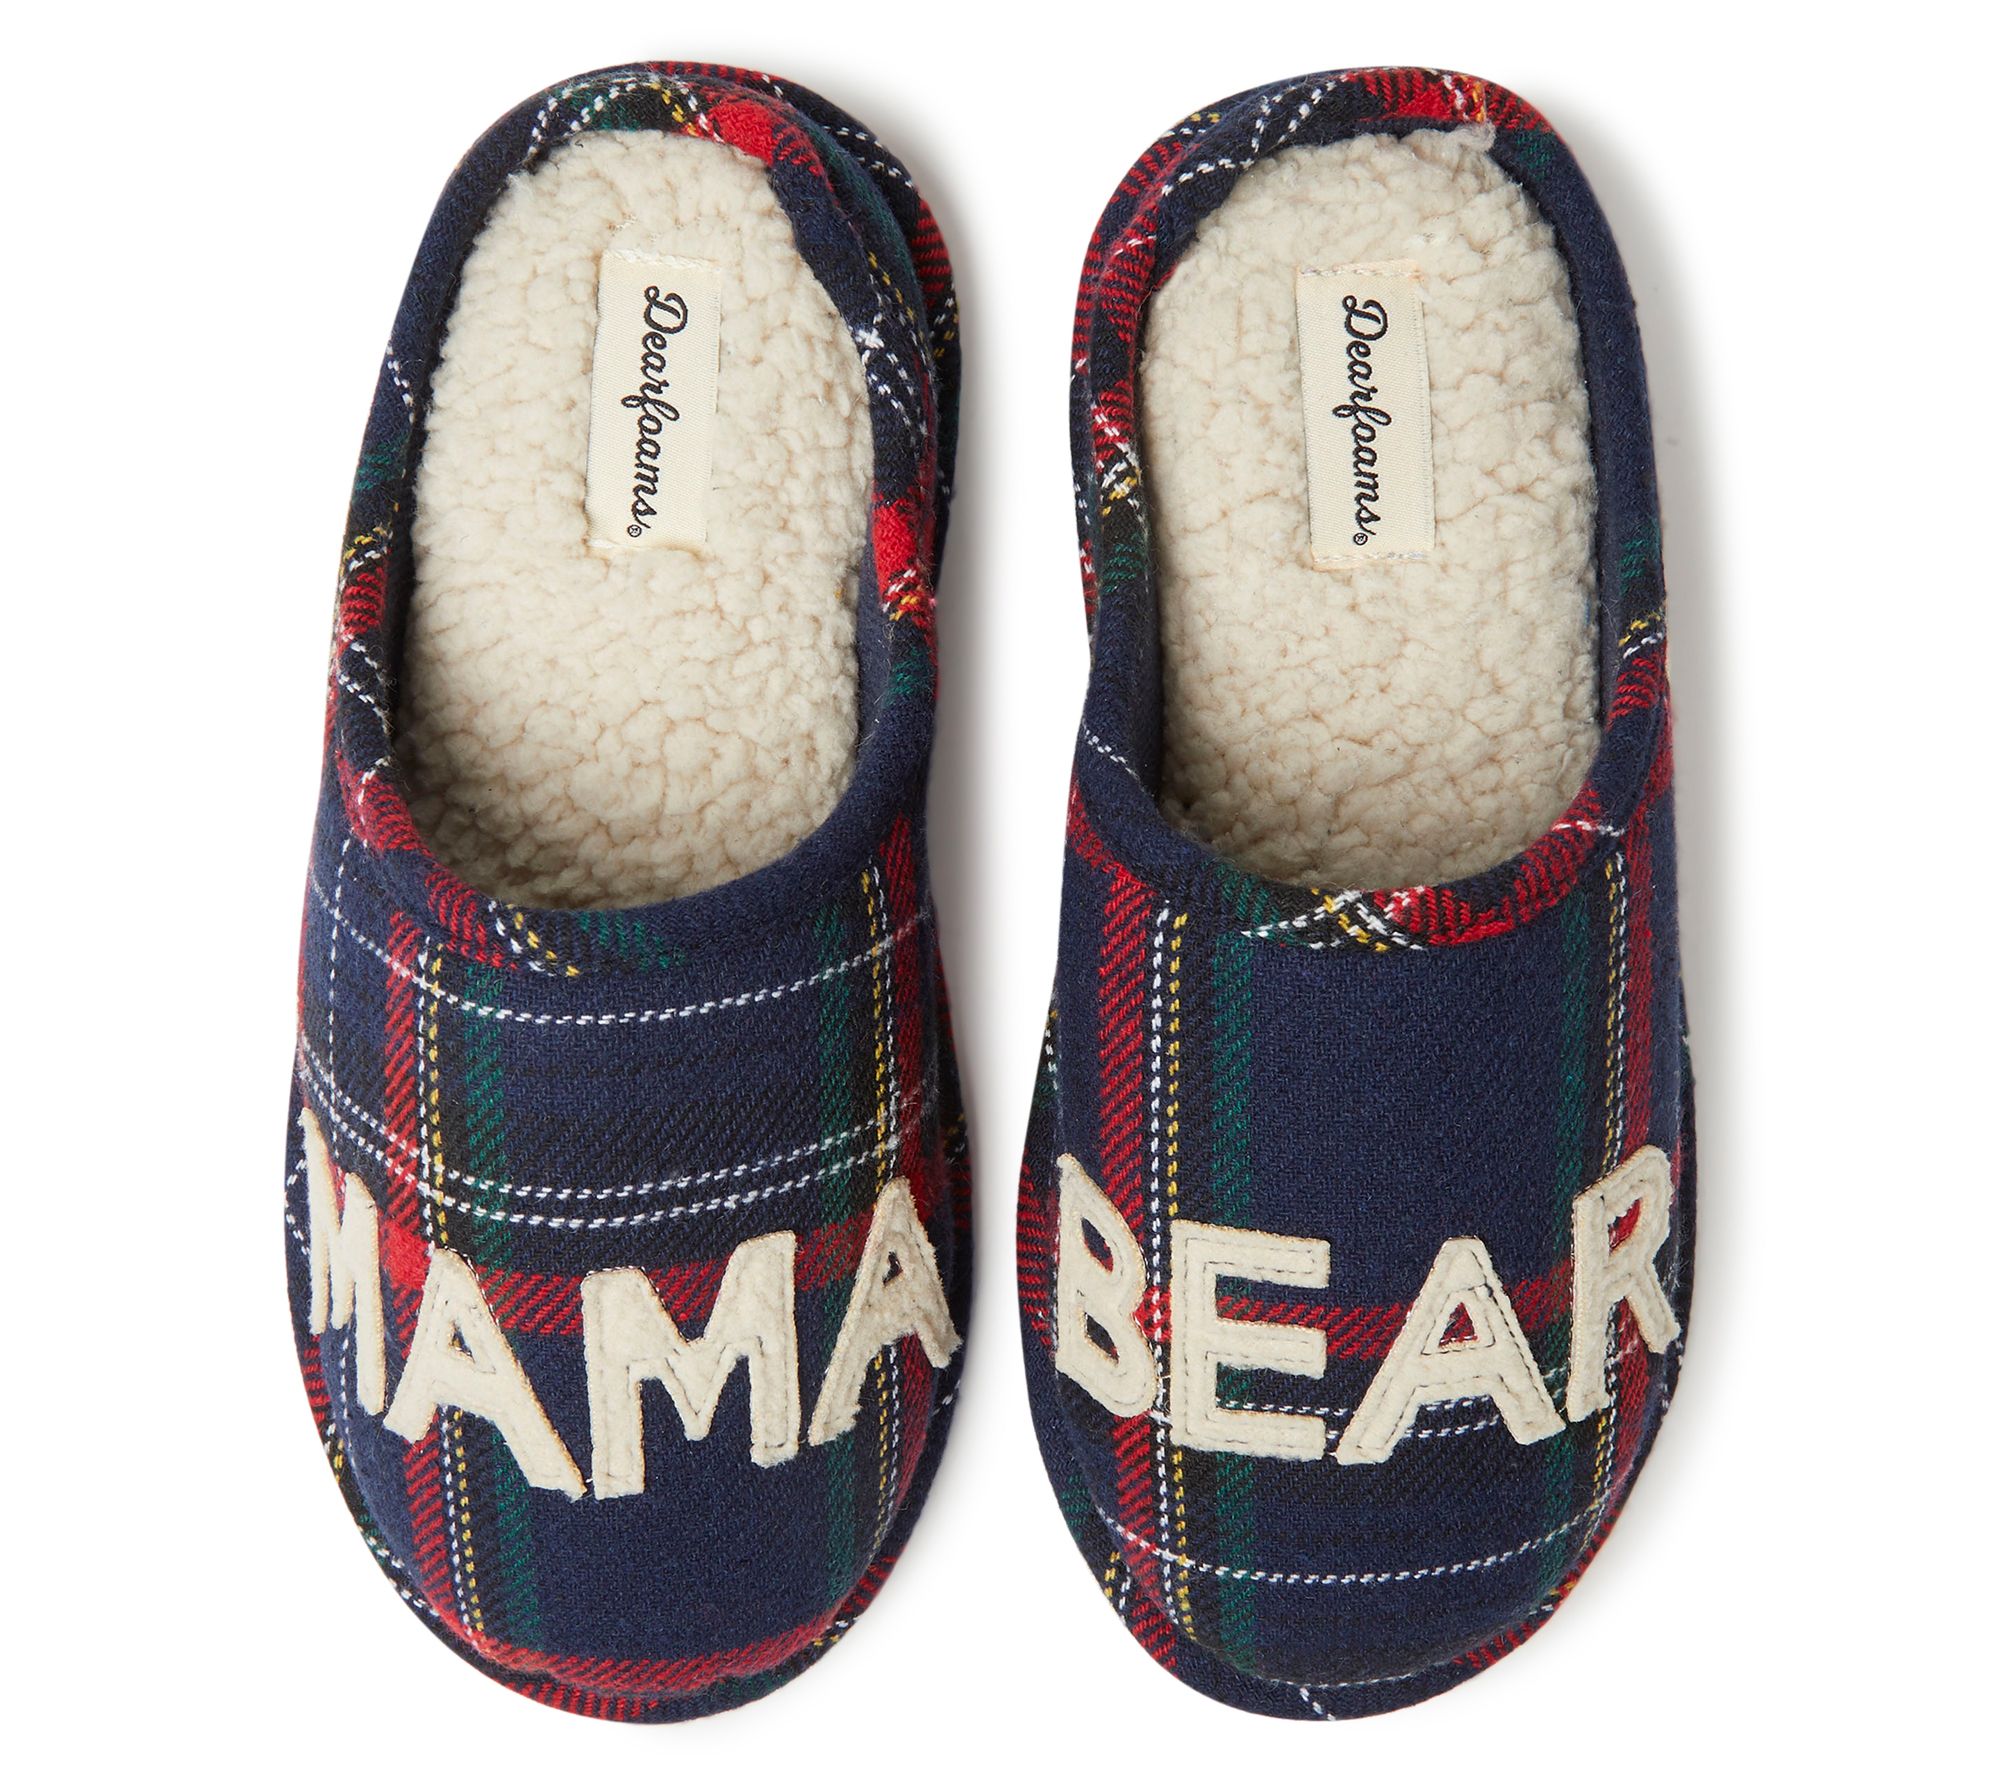 moma bear slippers